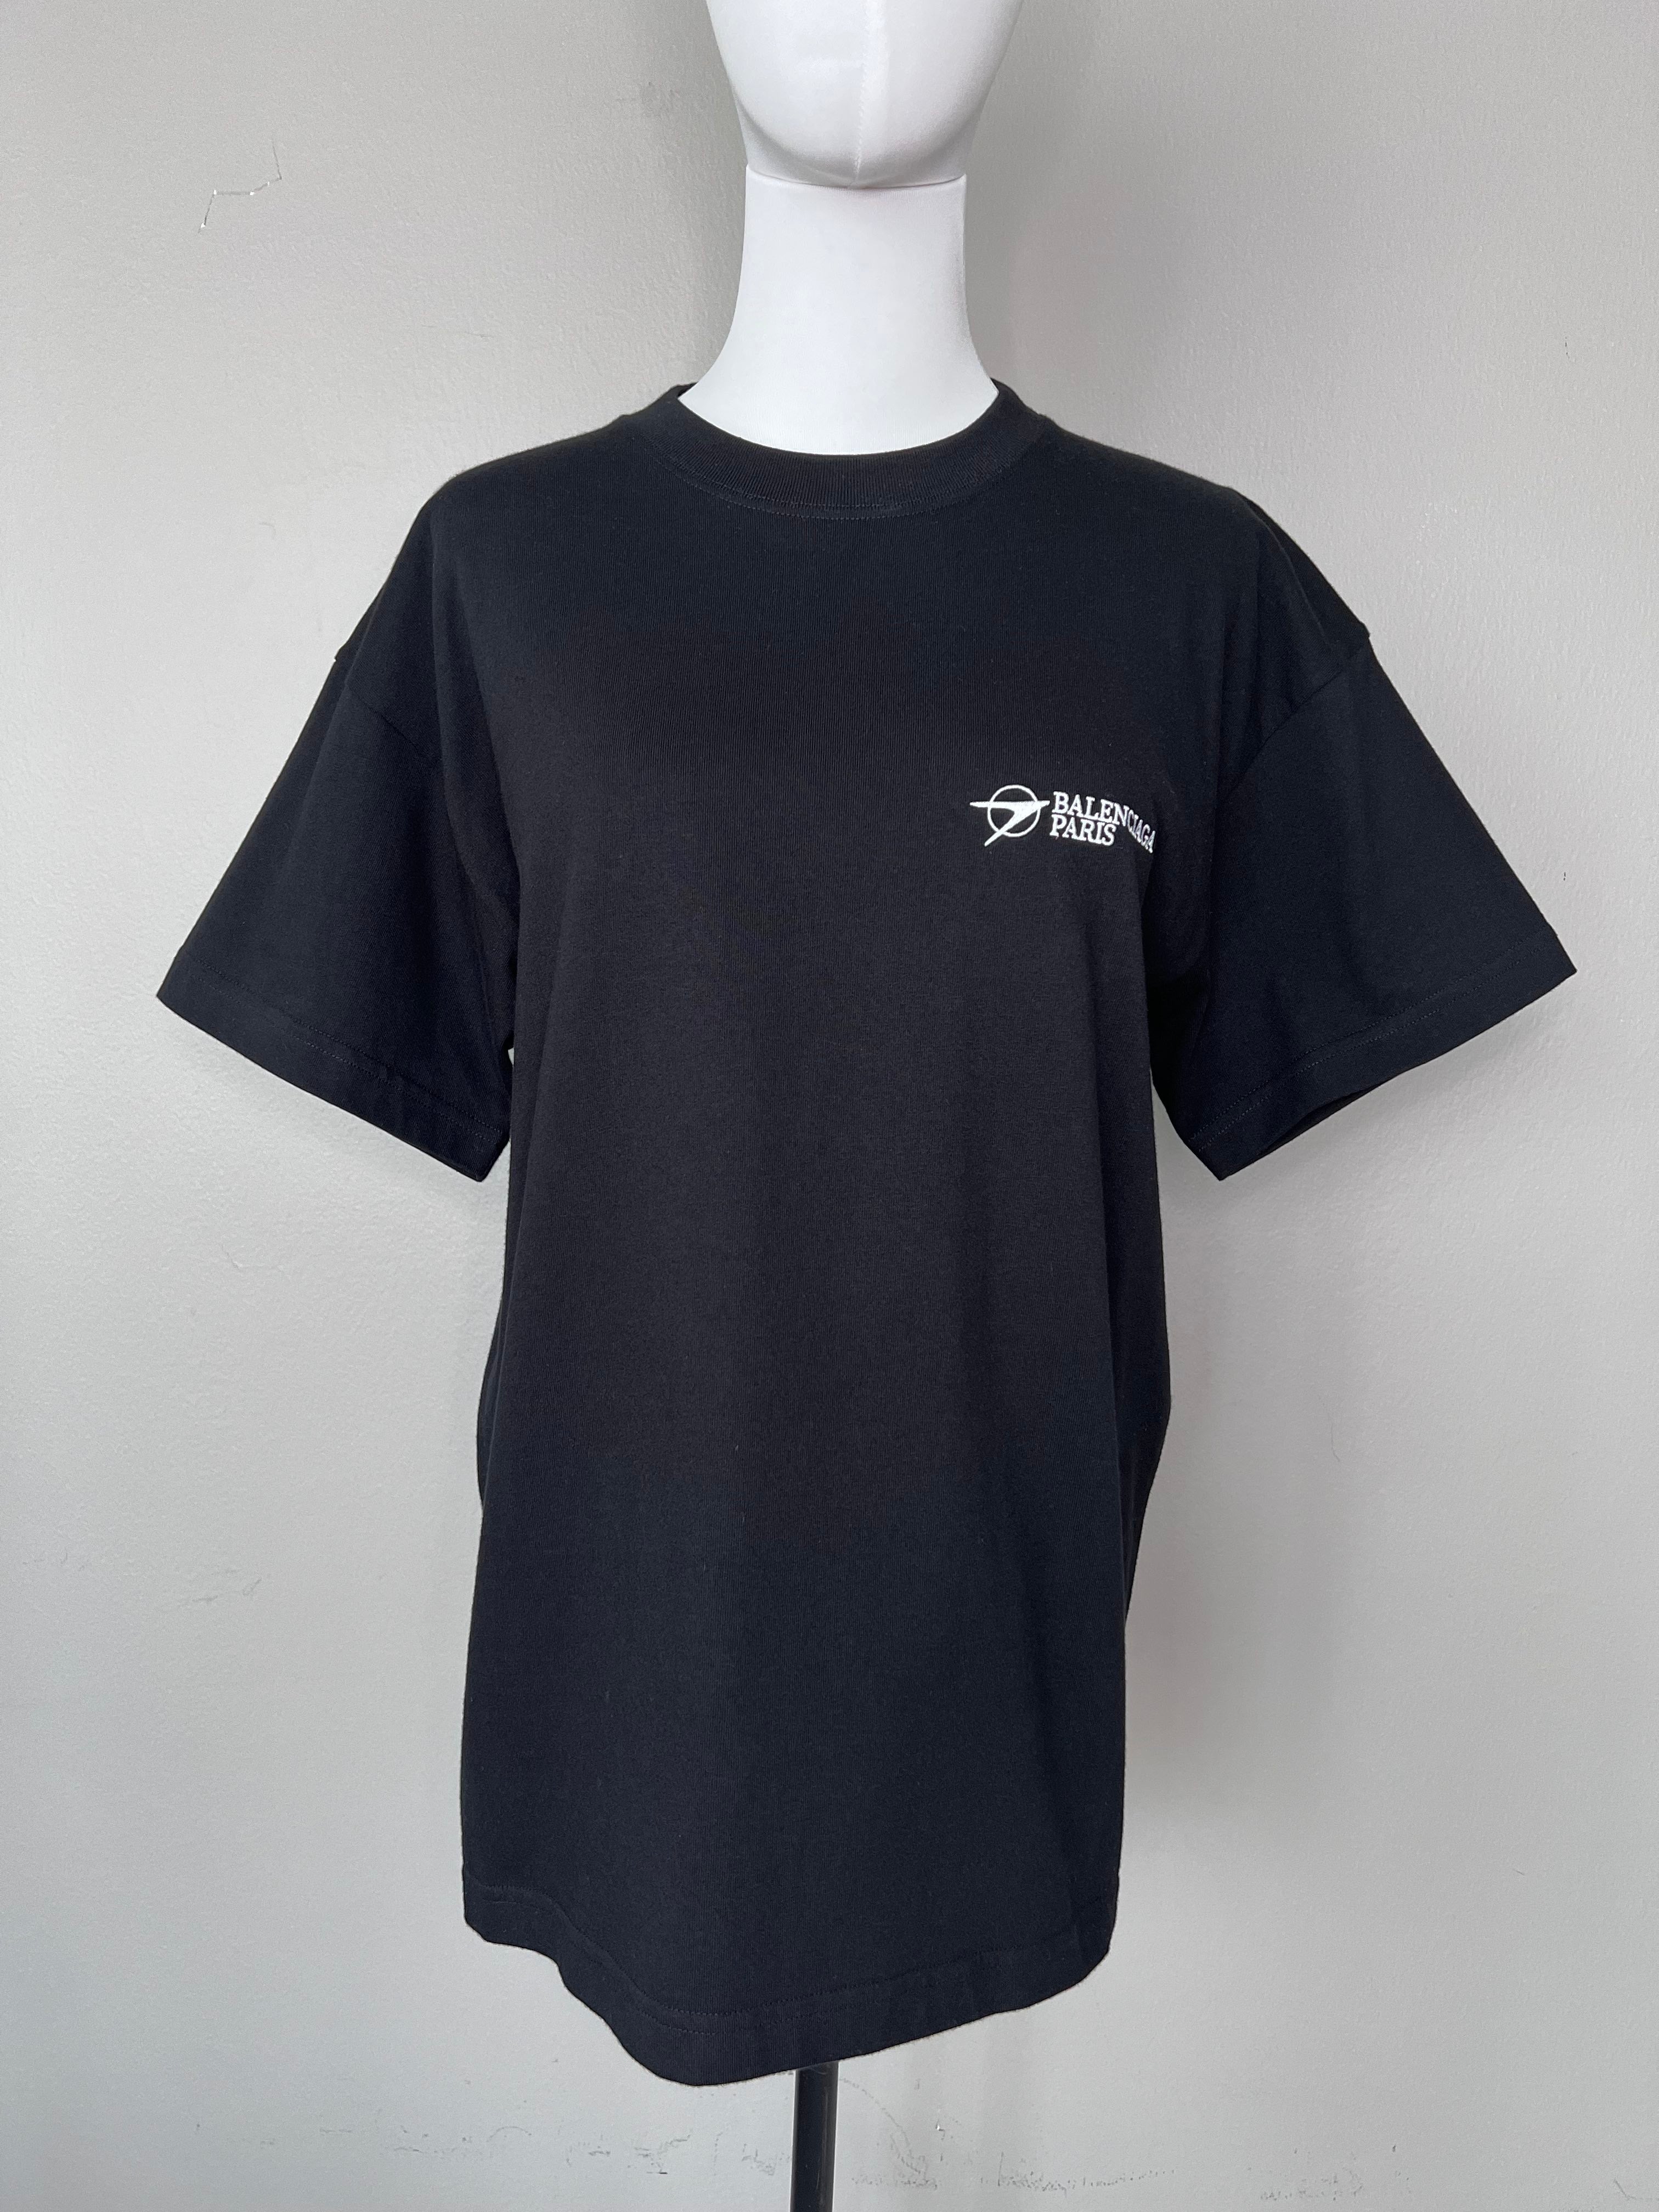 Black plain t-shirt with logo across back - BALENCIAGA